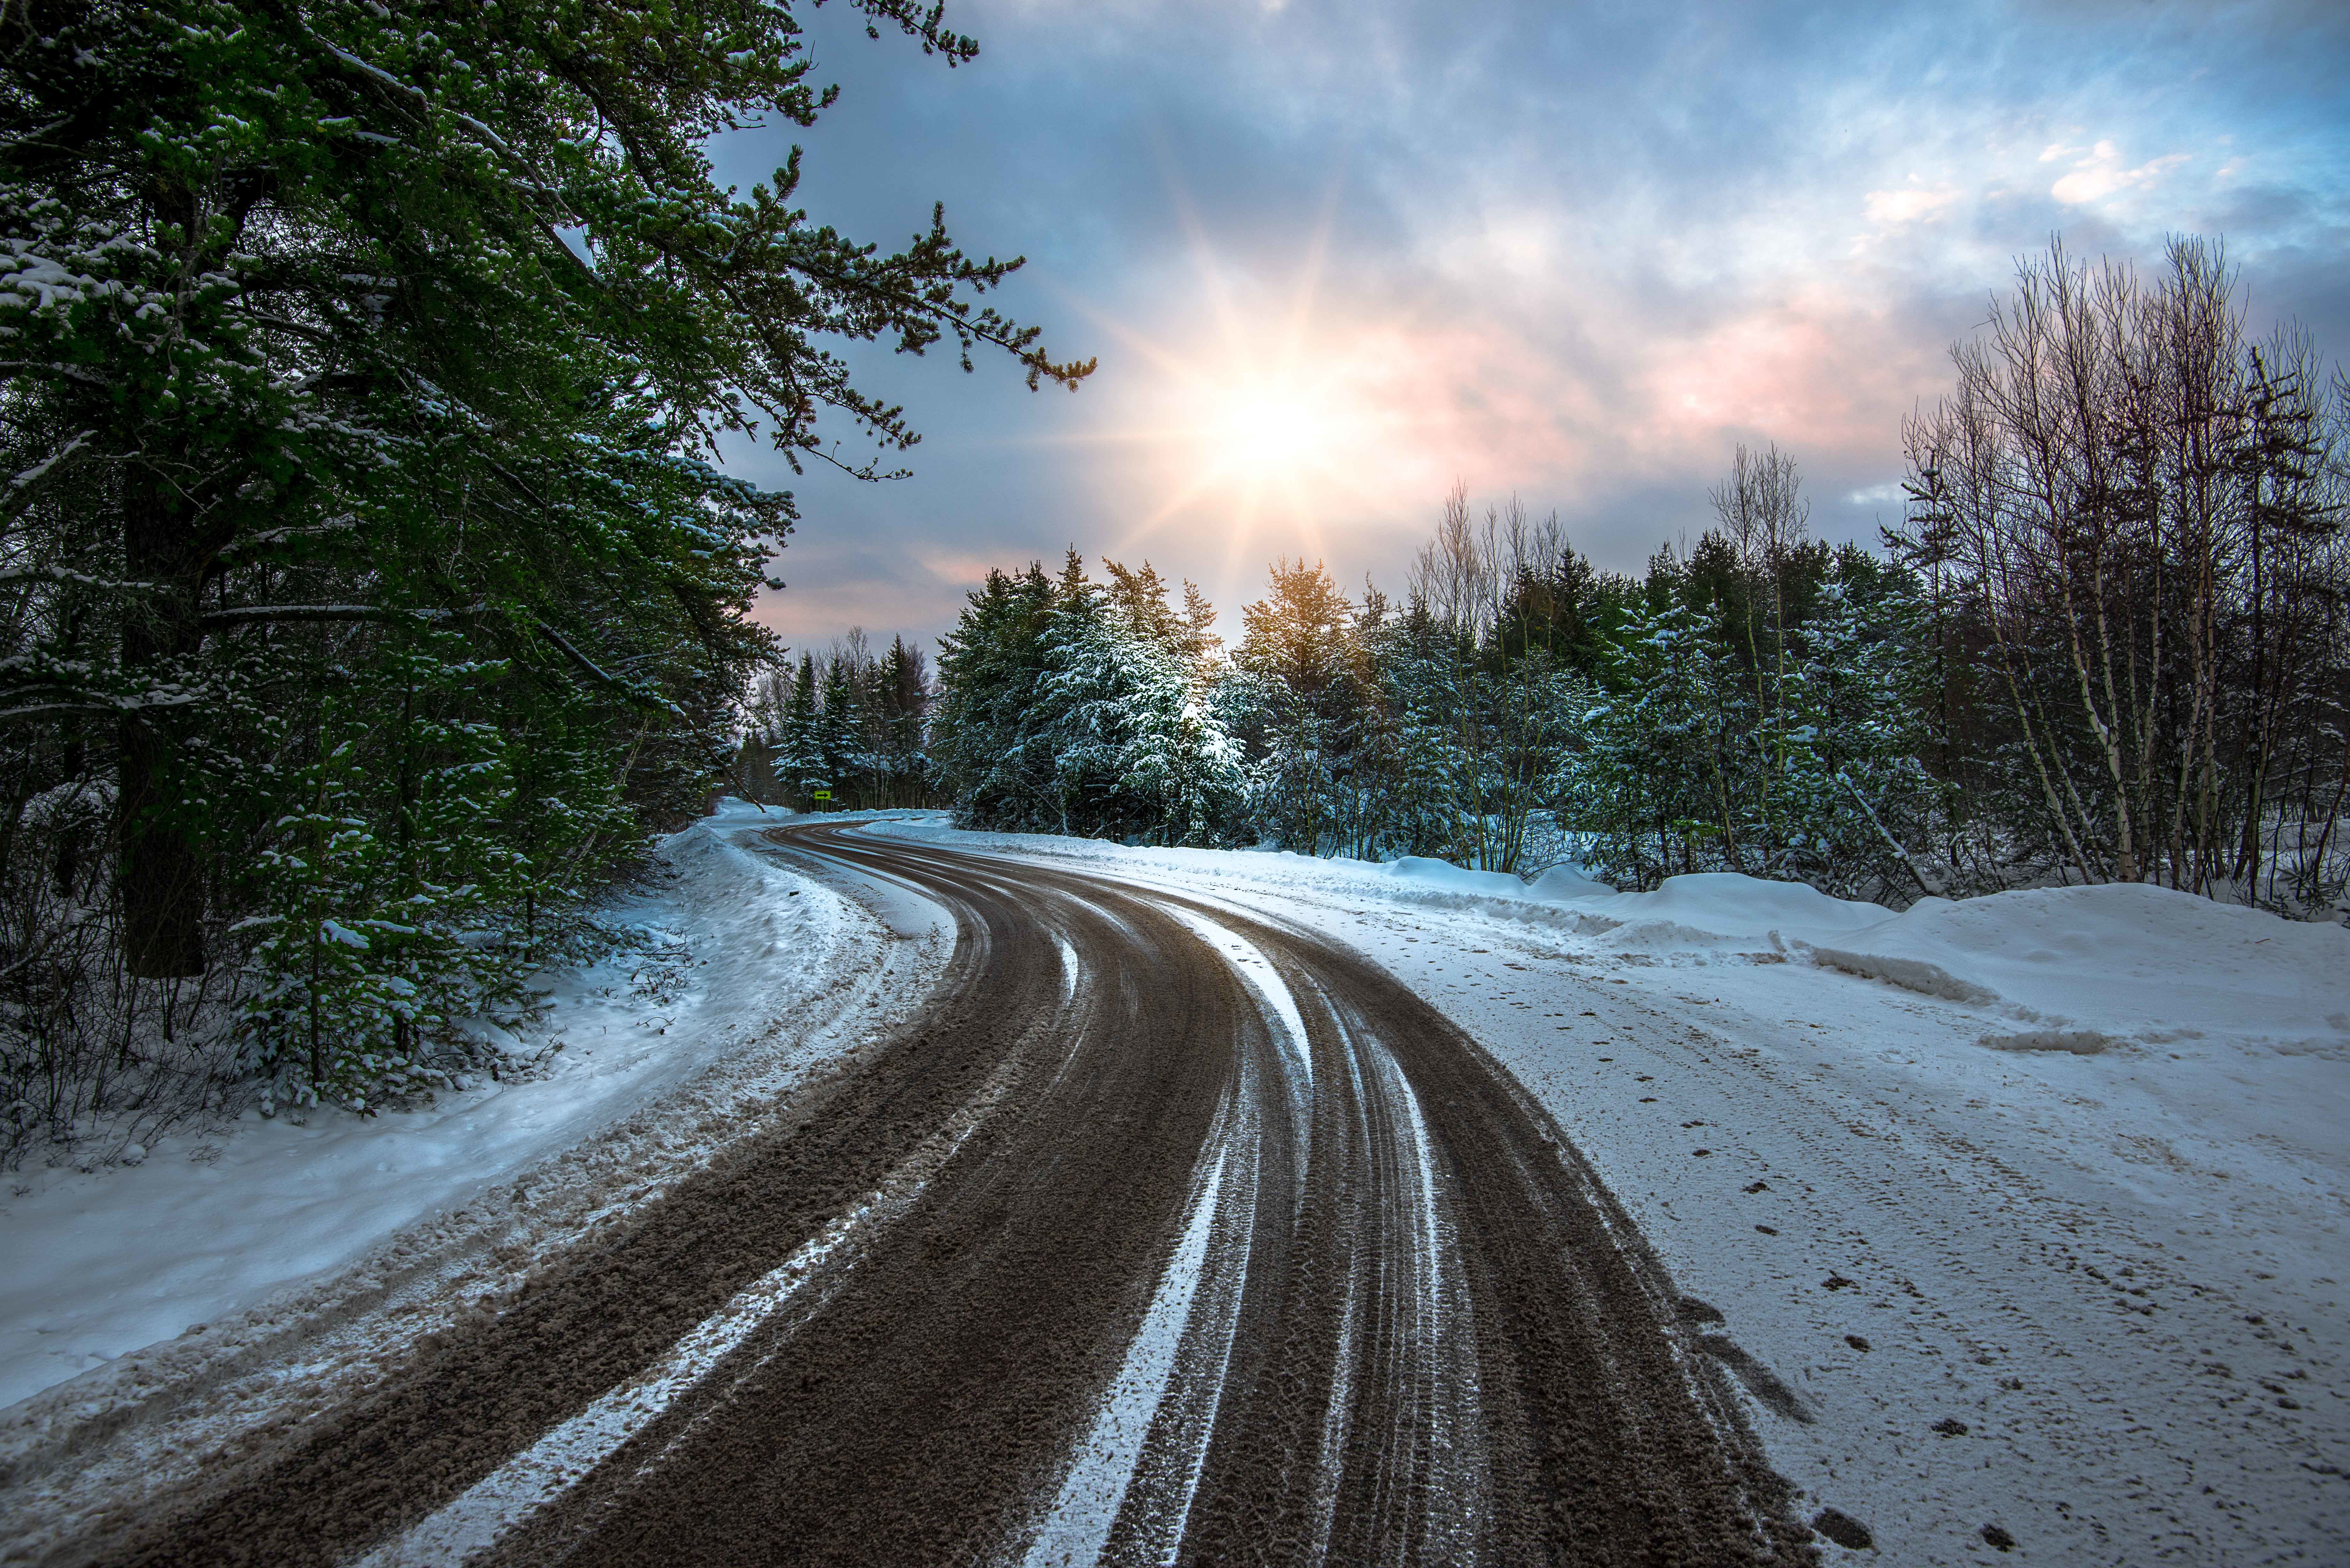 Тема зимней дороги. Зимние дороги. Снежная дорога. Заснеженная дорога. Зимняя трасса.